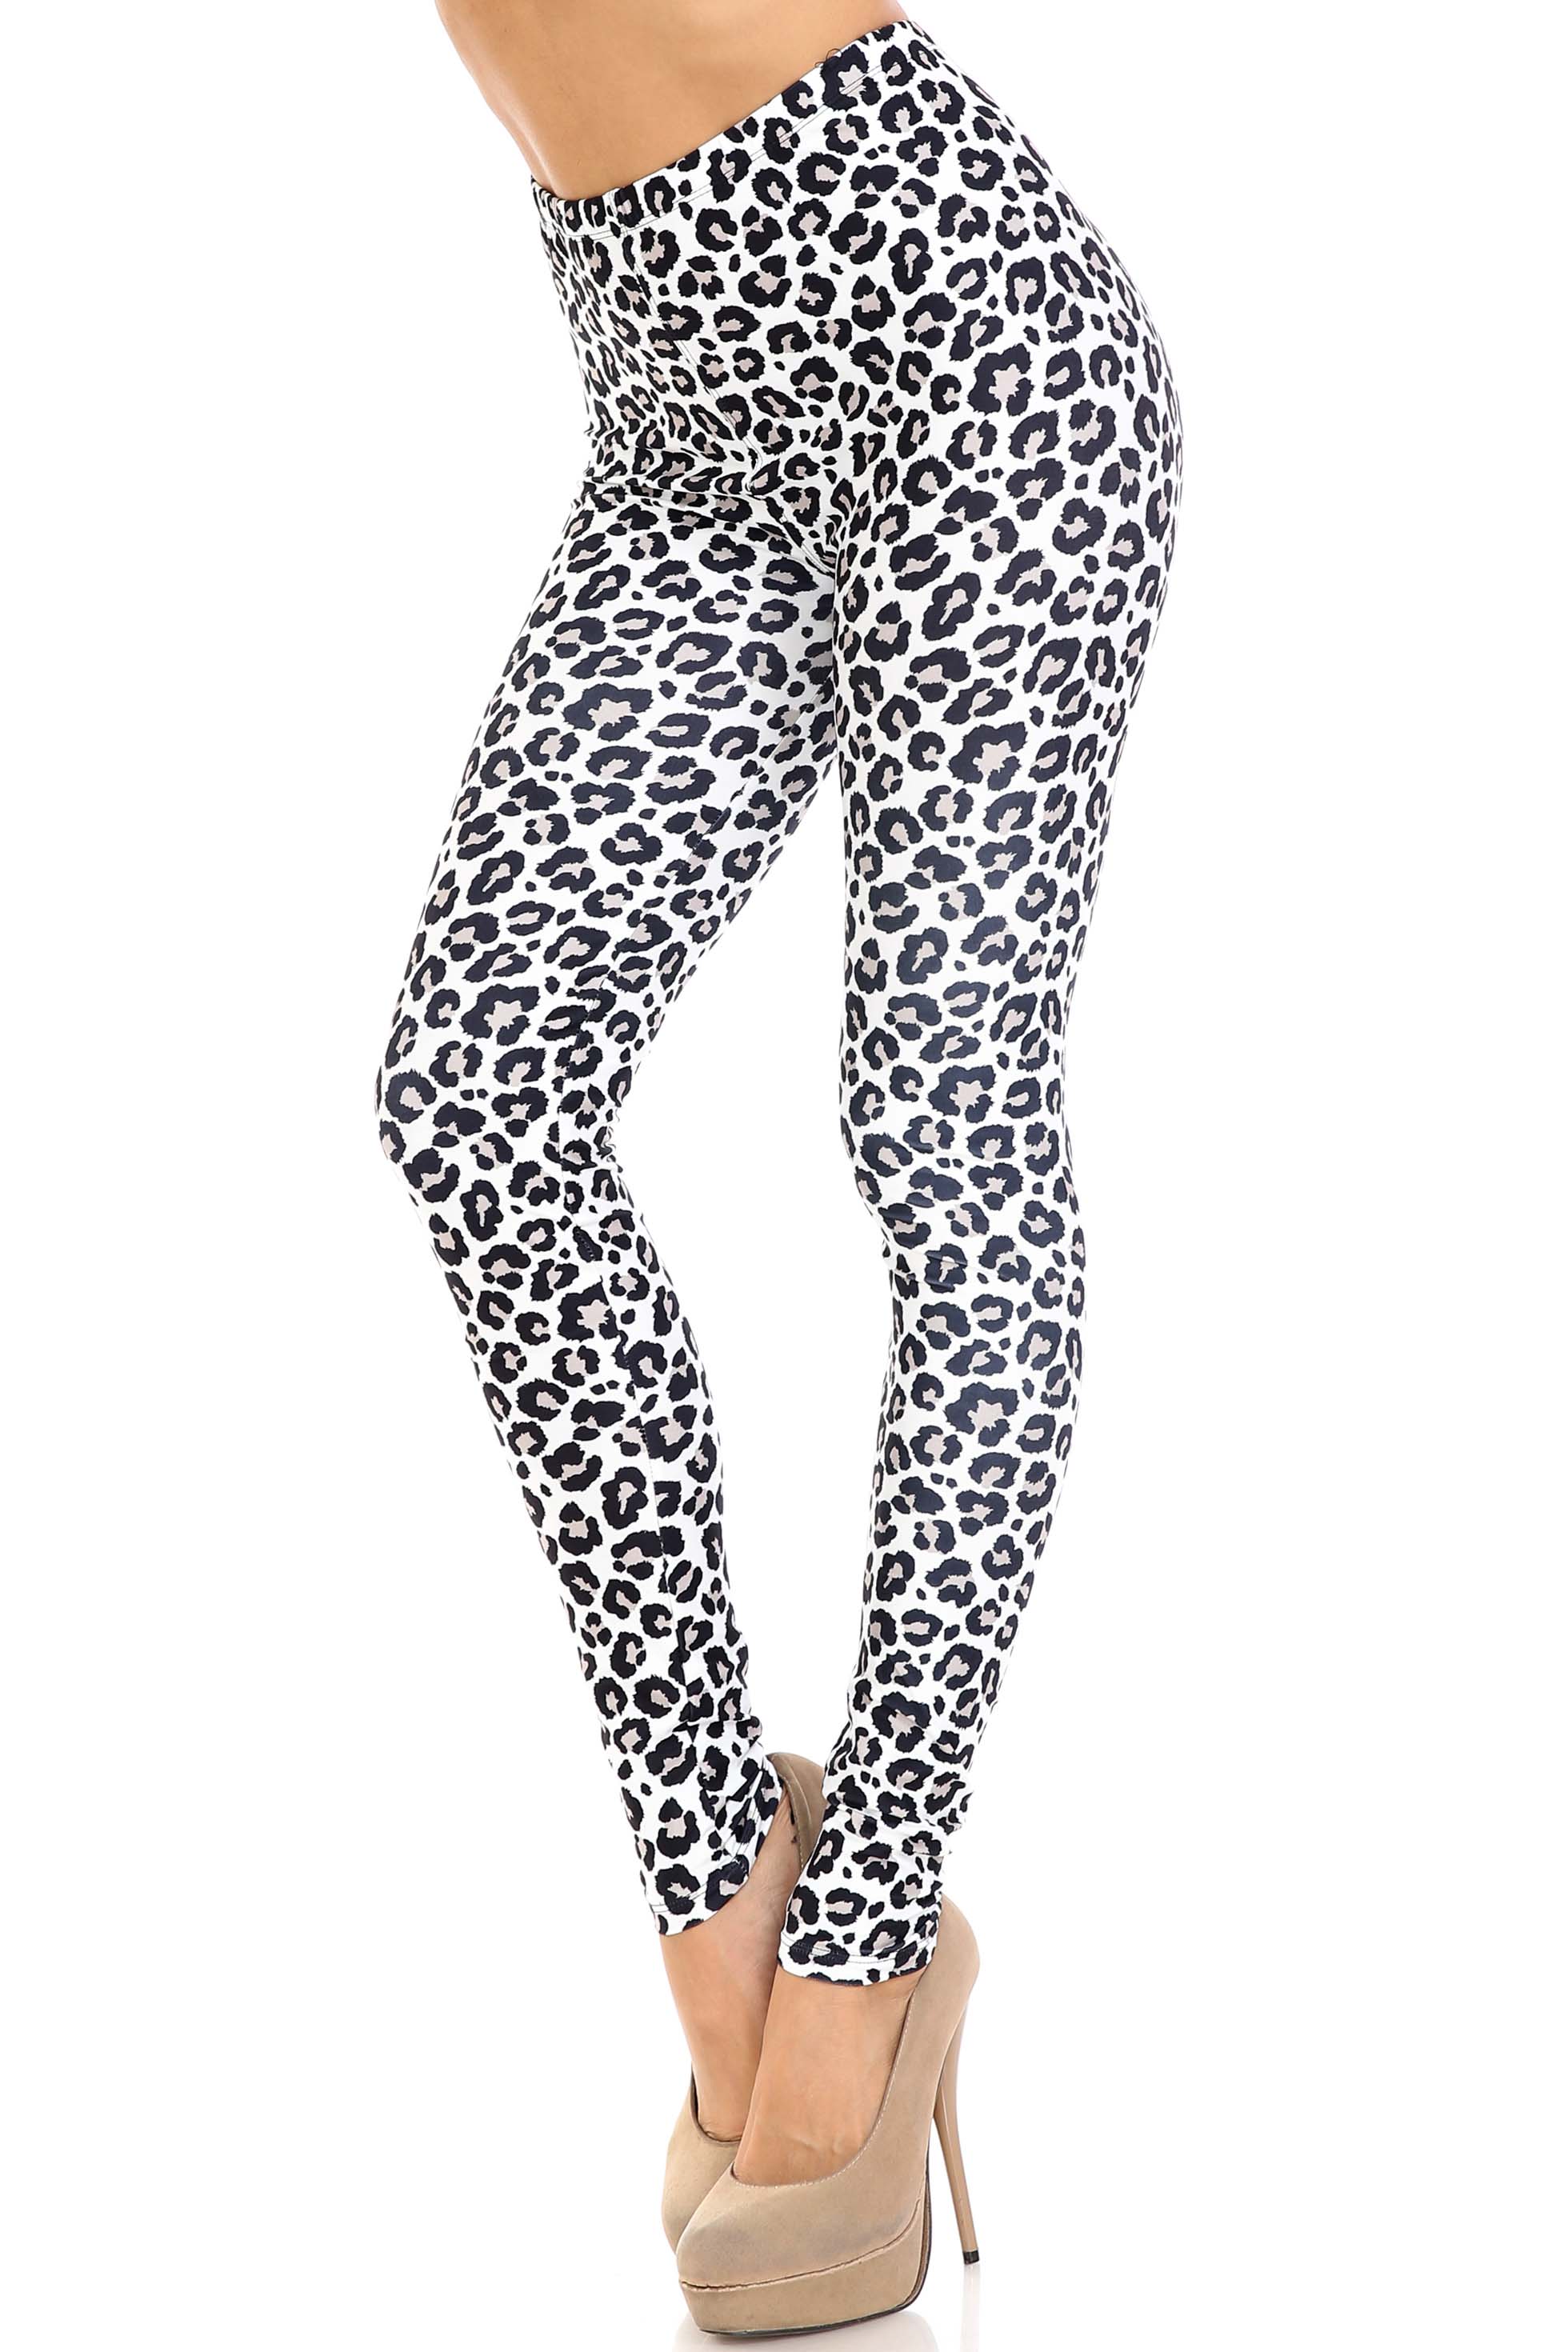 Wholesale Creamy Soft Urban Leopard Leggings - USA Fashion™